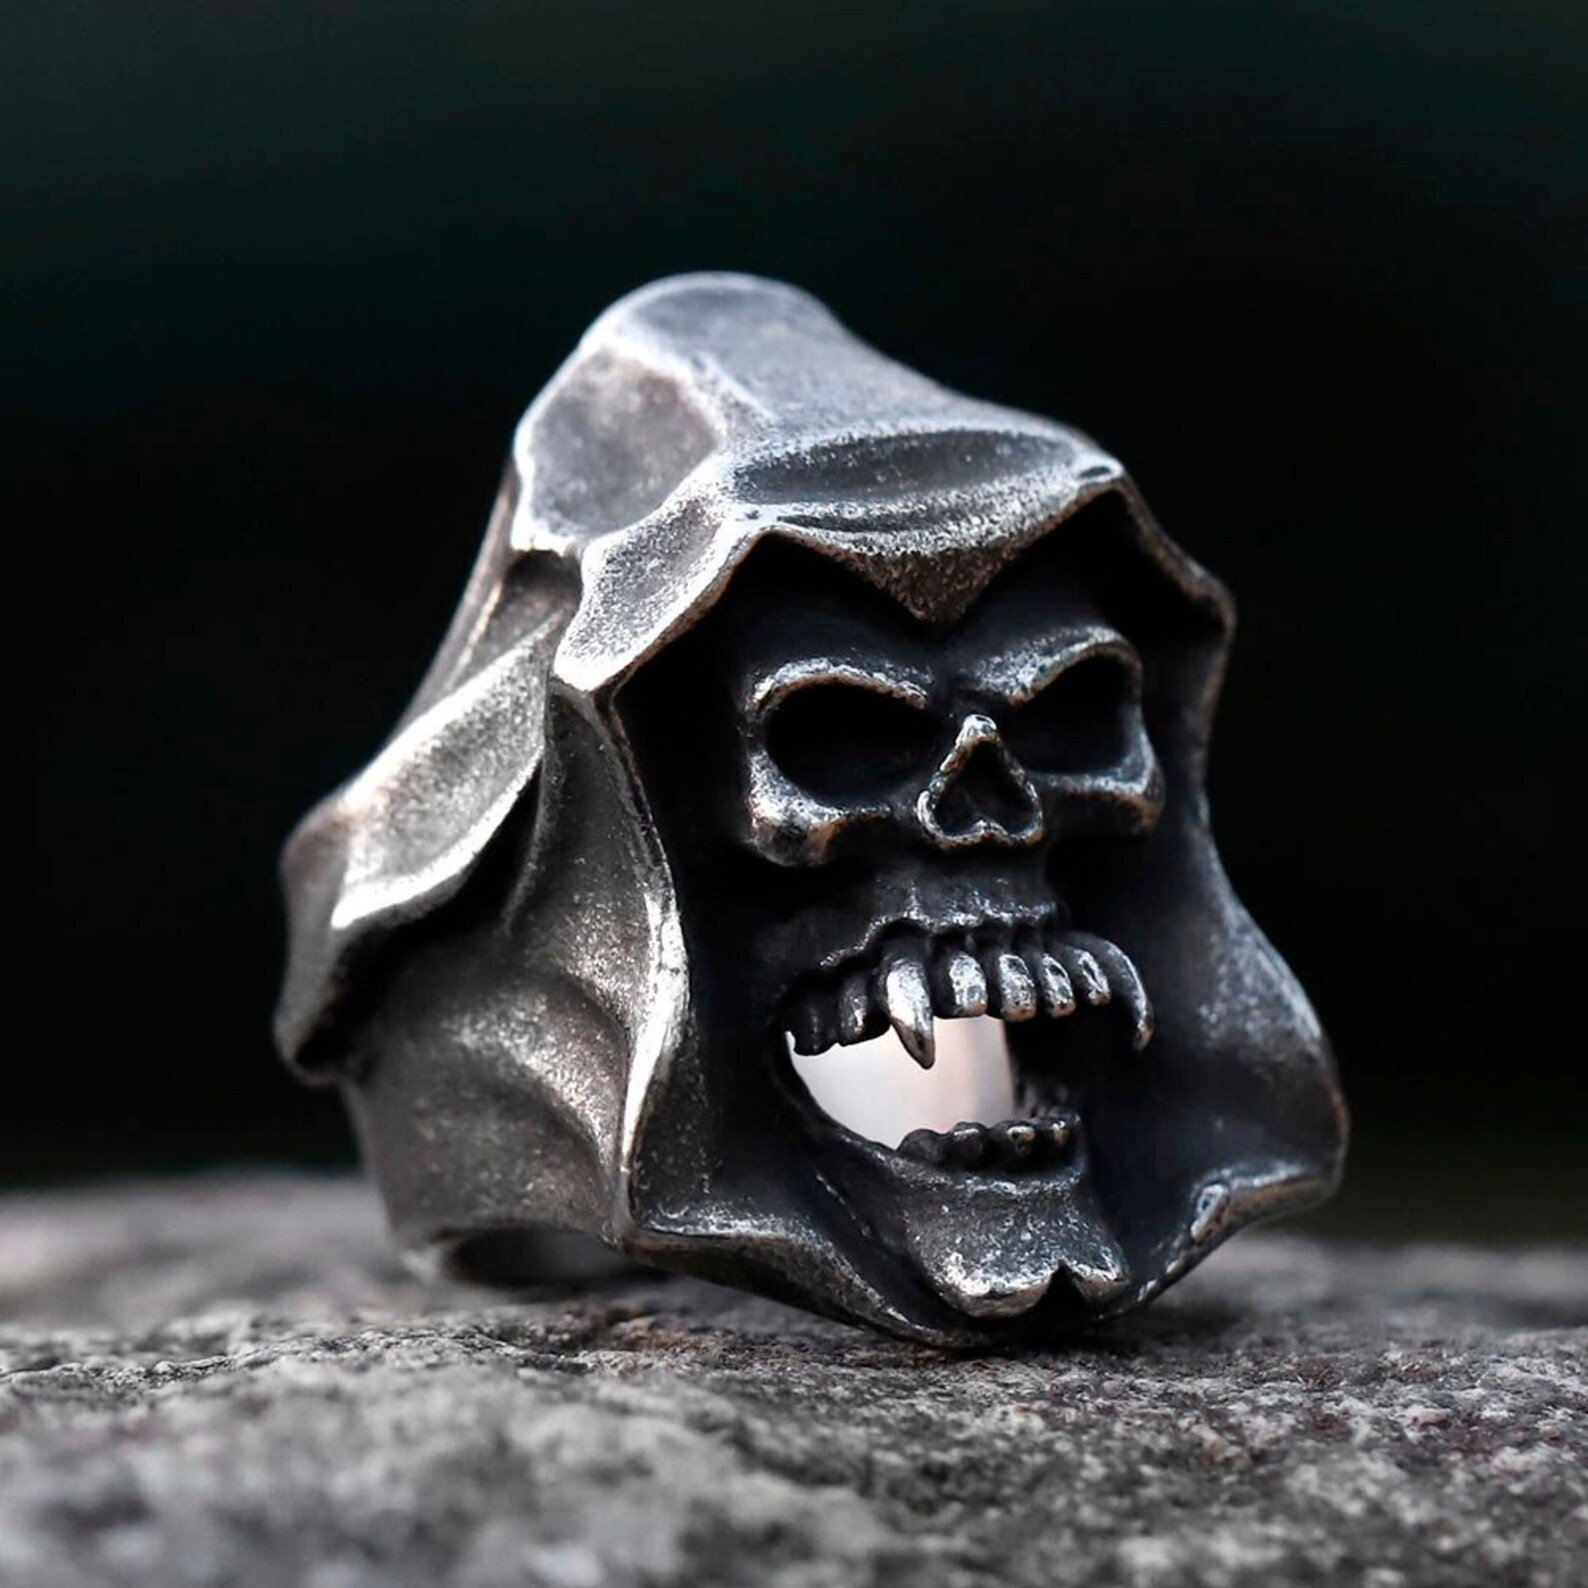 Vanna Grim Reaper Skull Punk Ring 316L Stainless Steel Gothic Skull Metal Skull Ring Biker Motorcycle